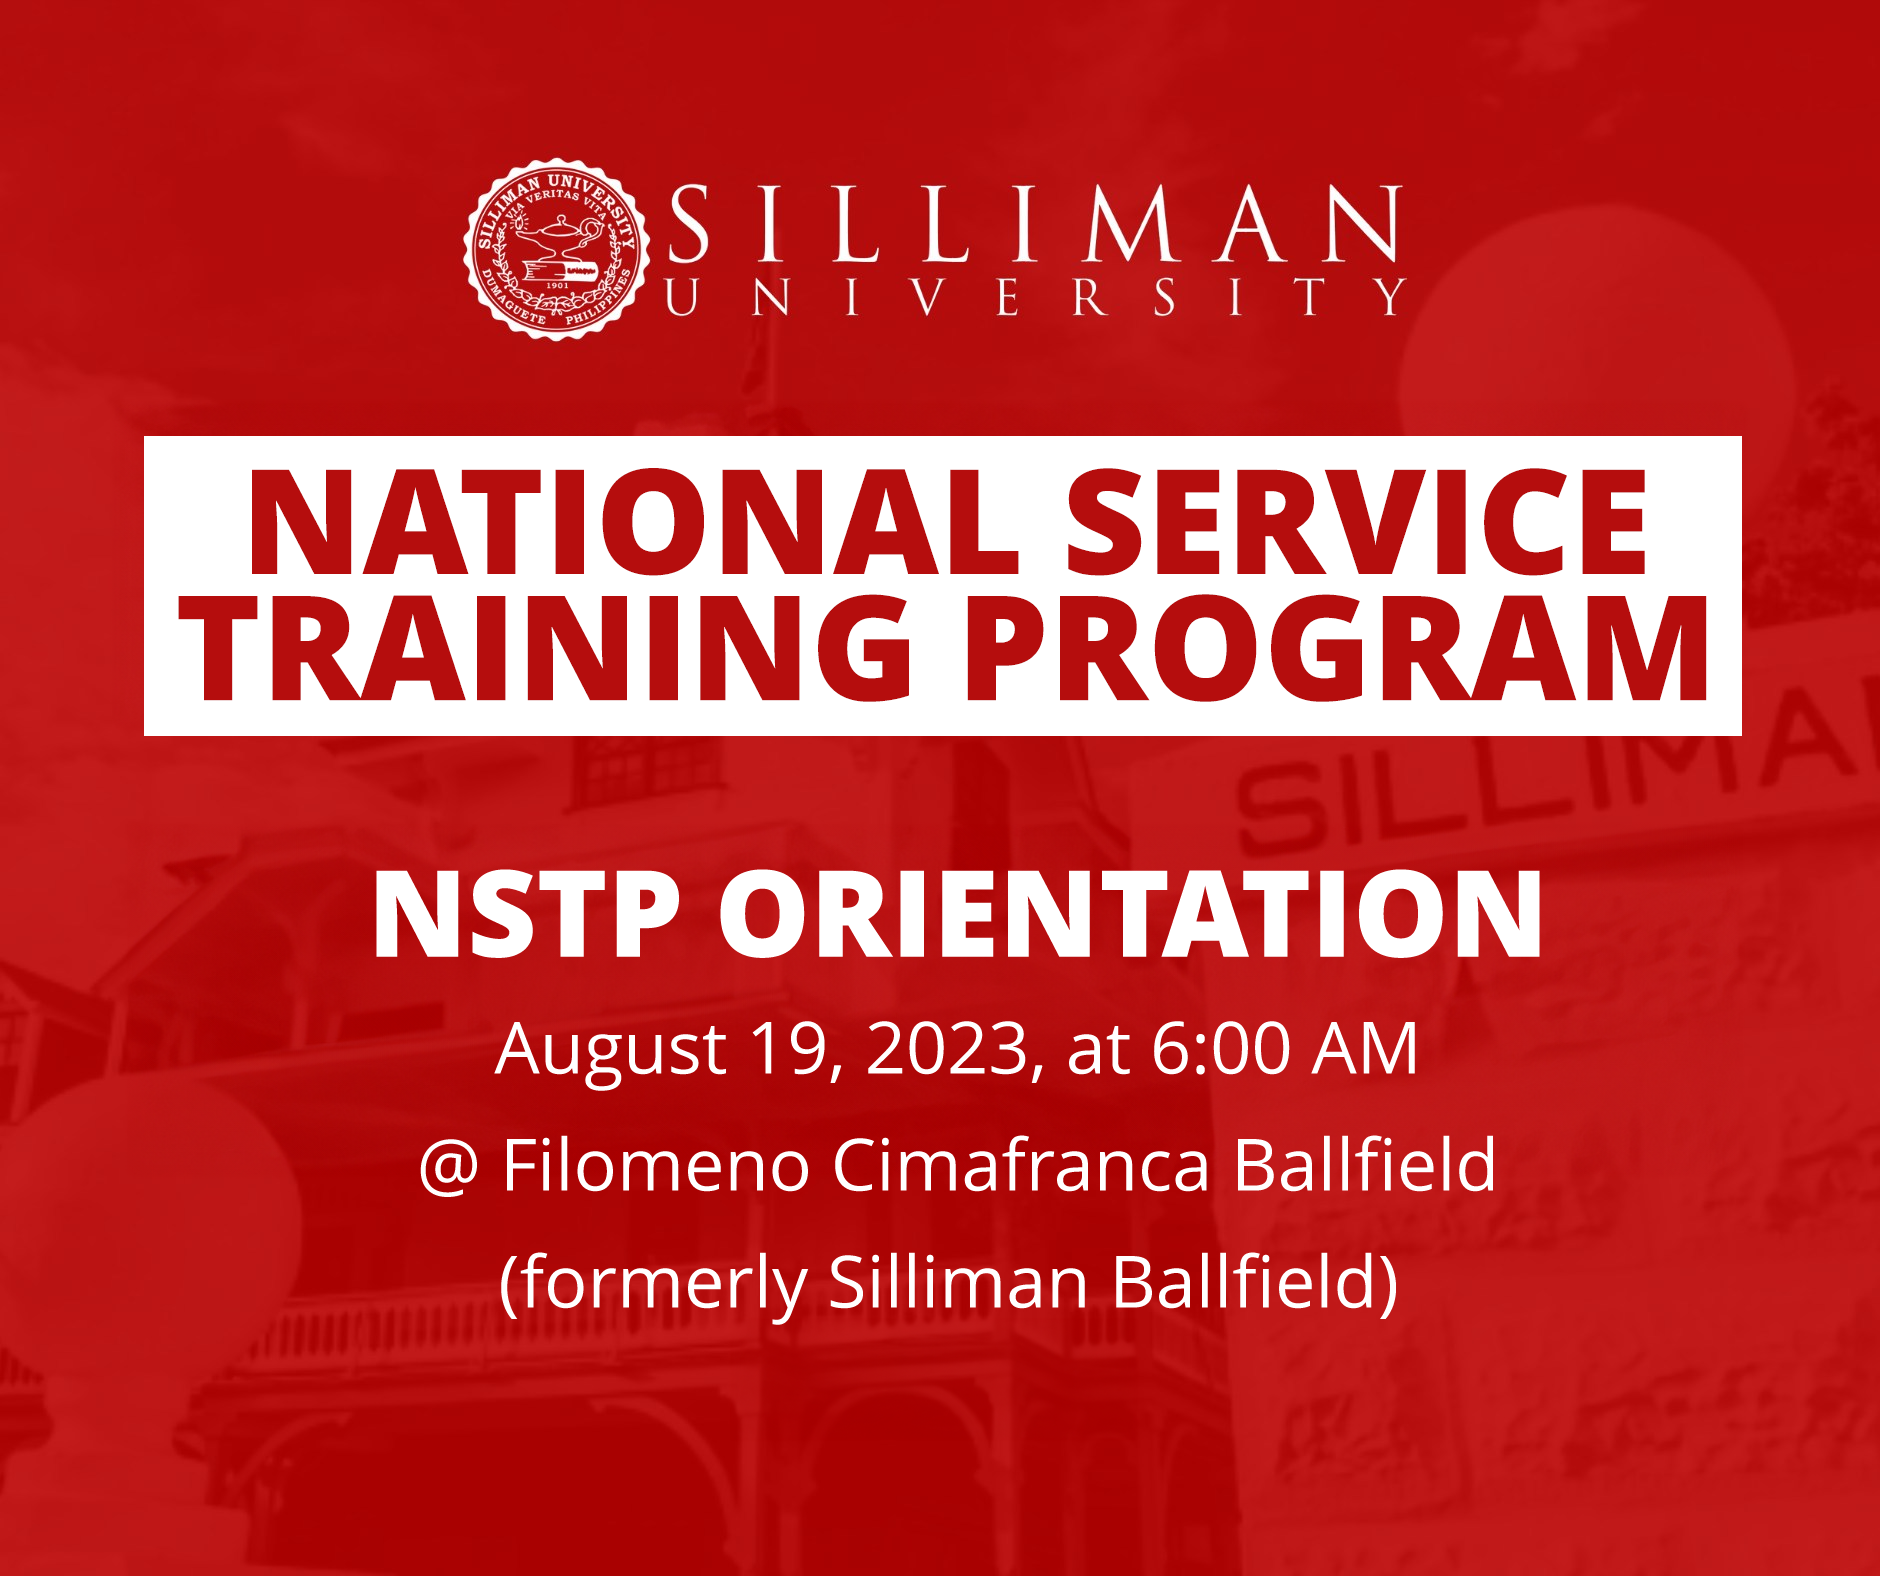 The National Service Training Program (NSTP) Orientation